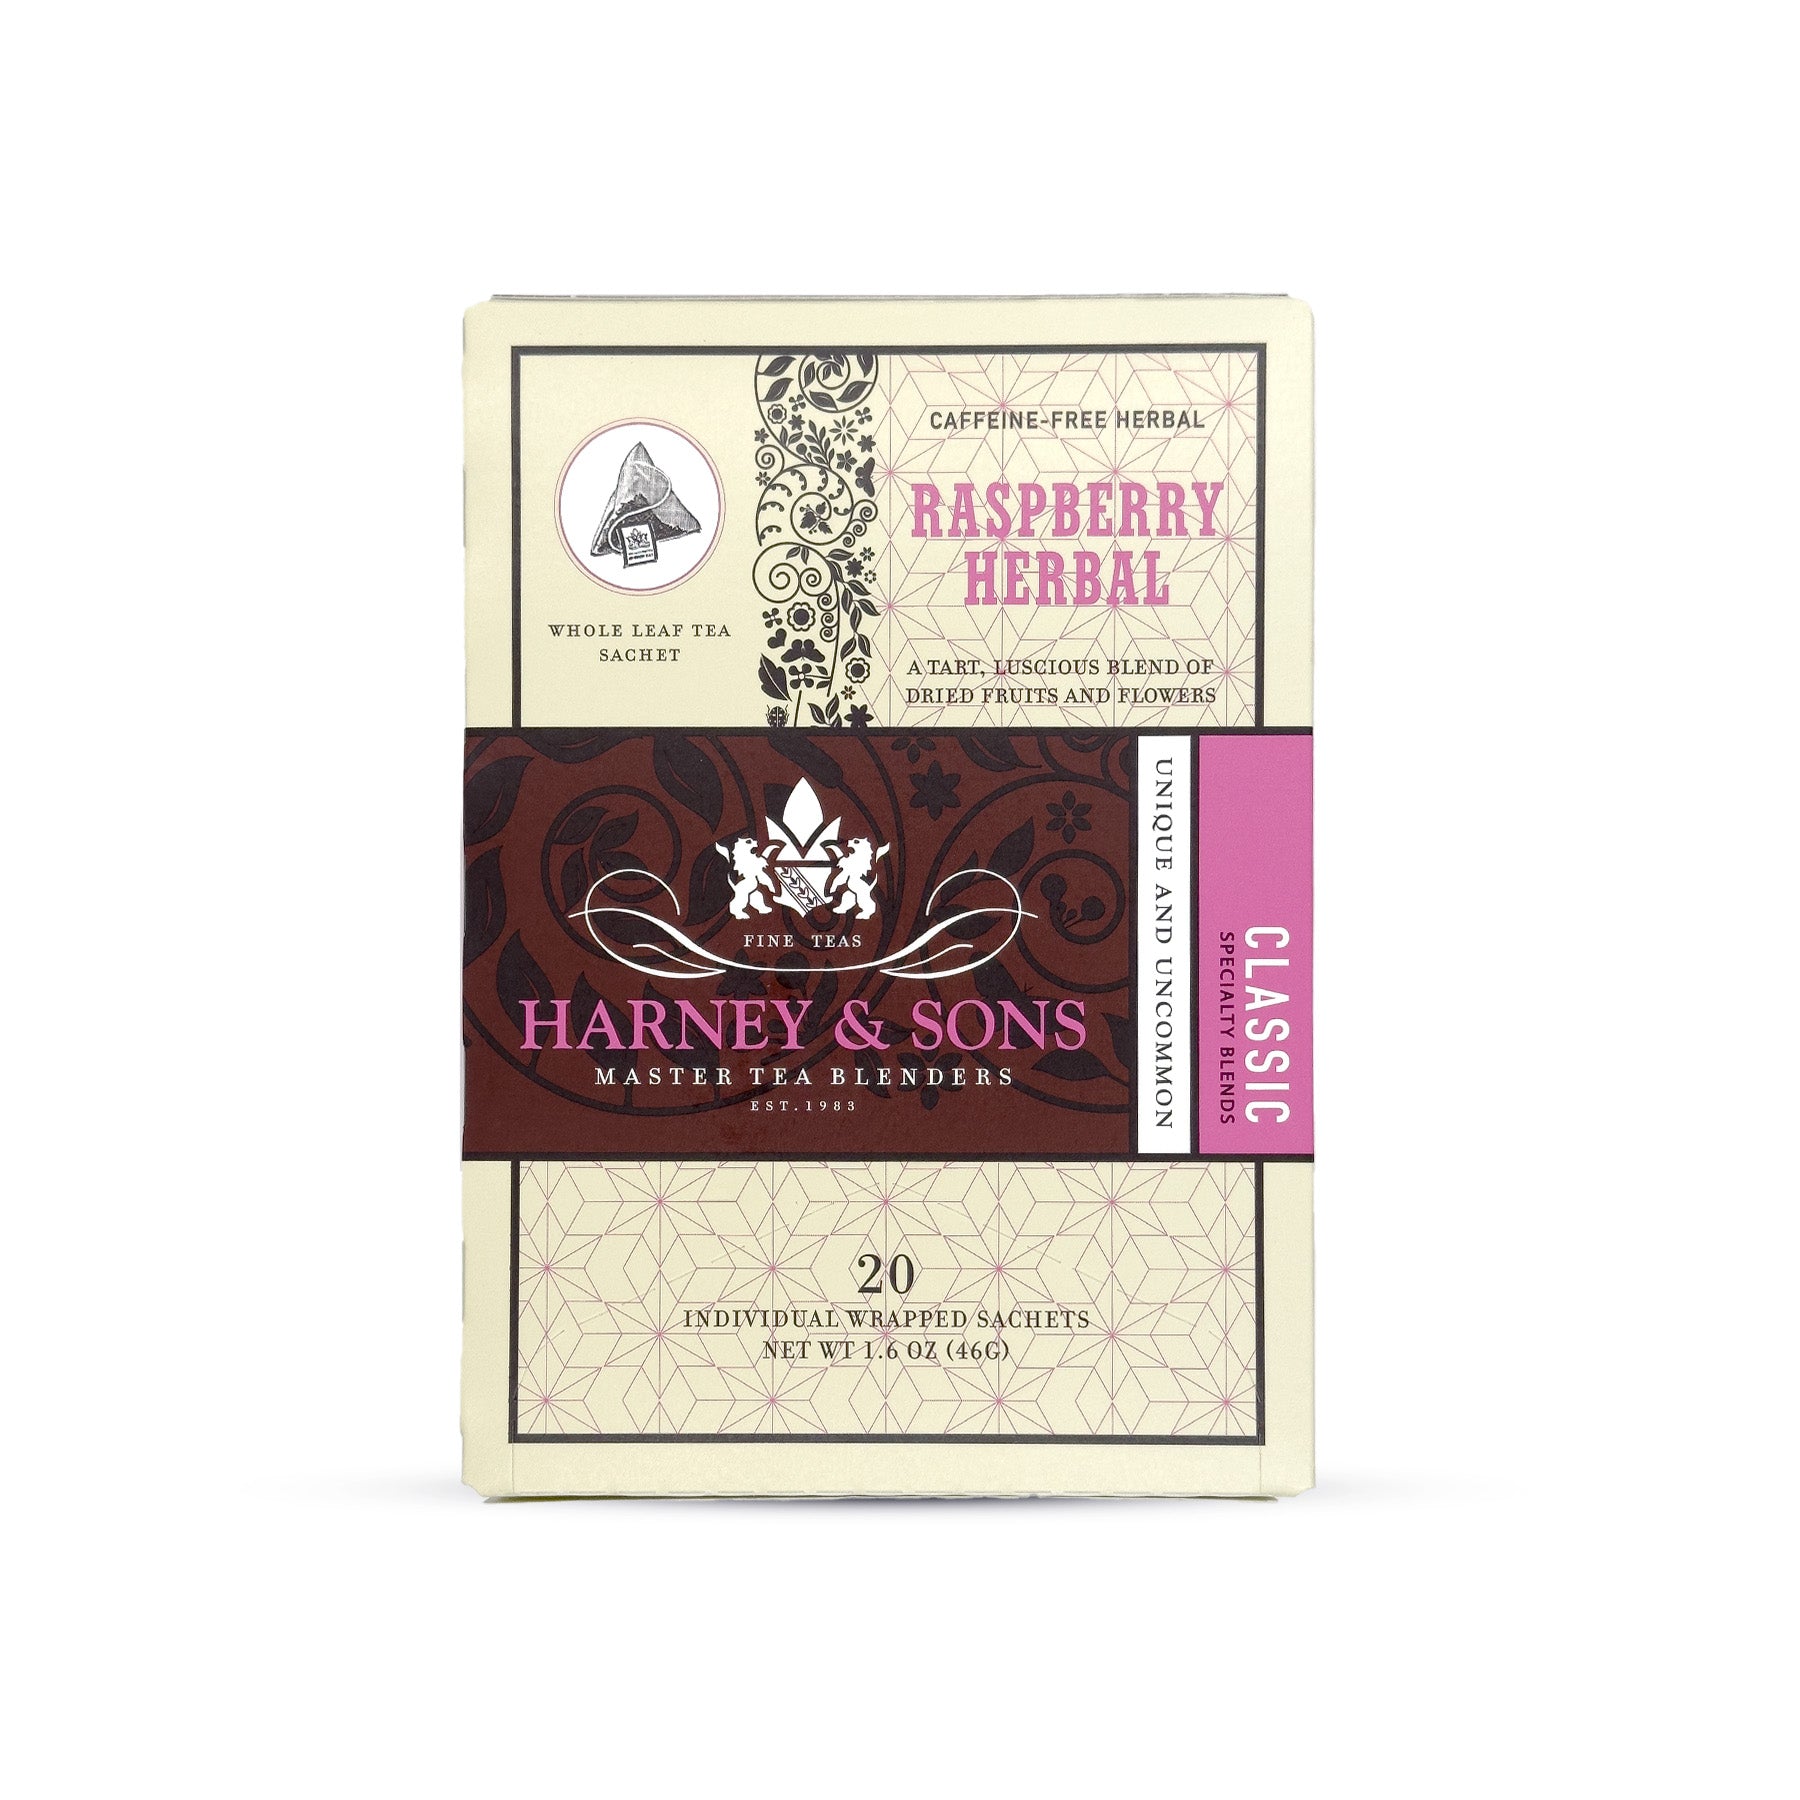 Raspberry Herbal - Box of 20 Wrapped Sachets - Harney & Sons Fine Teas Europe